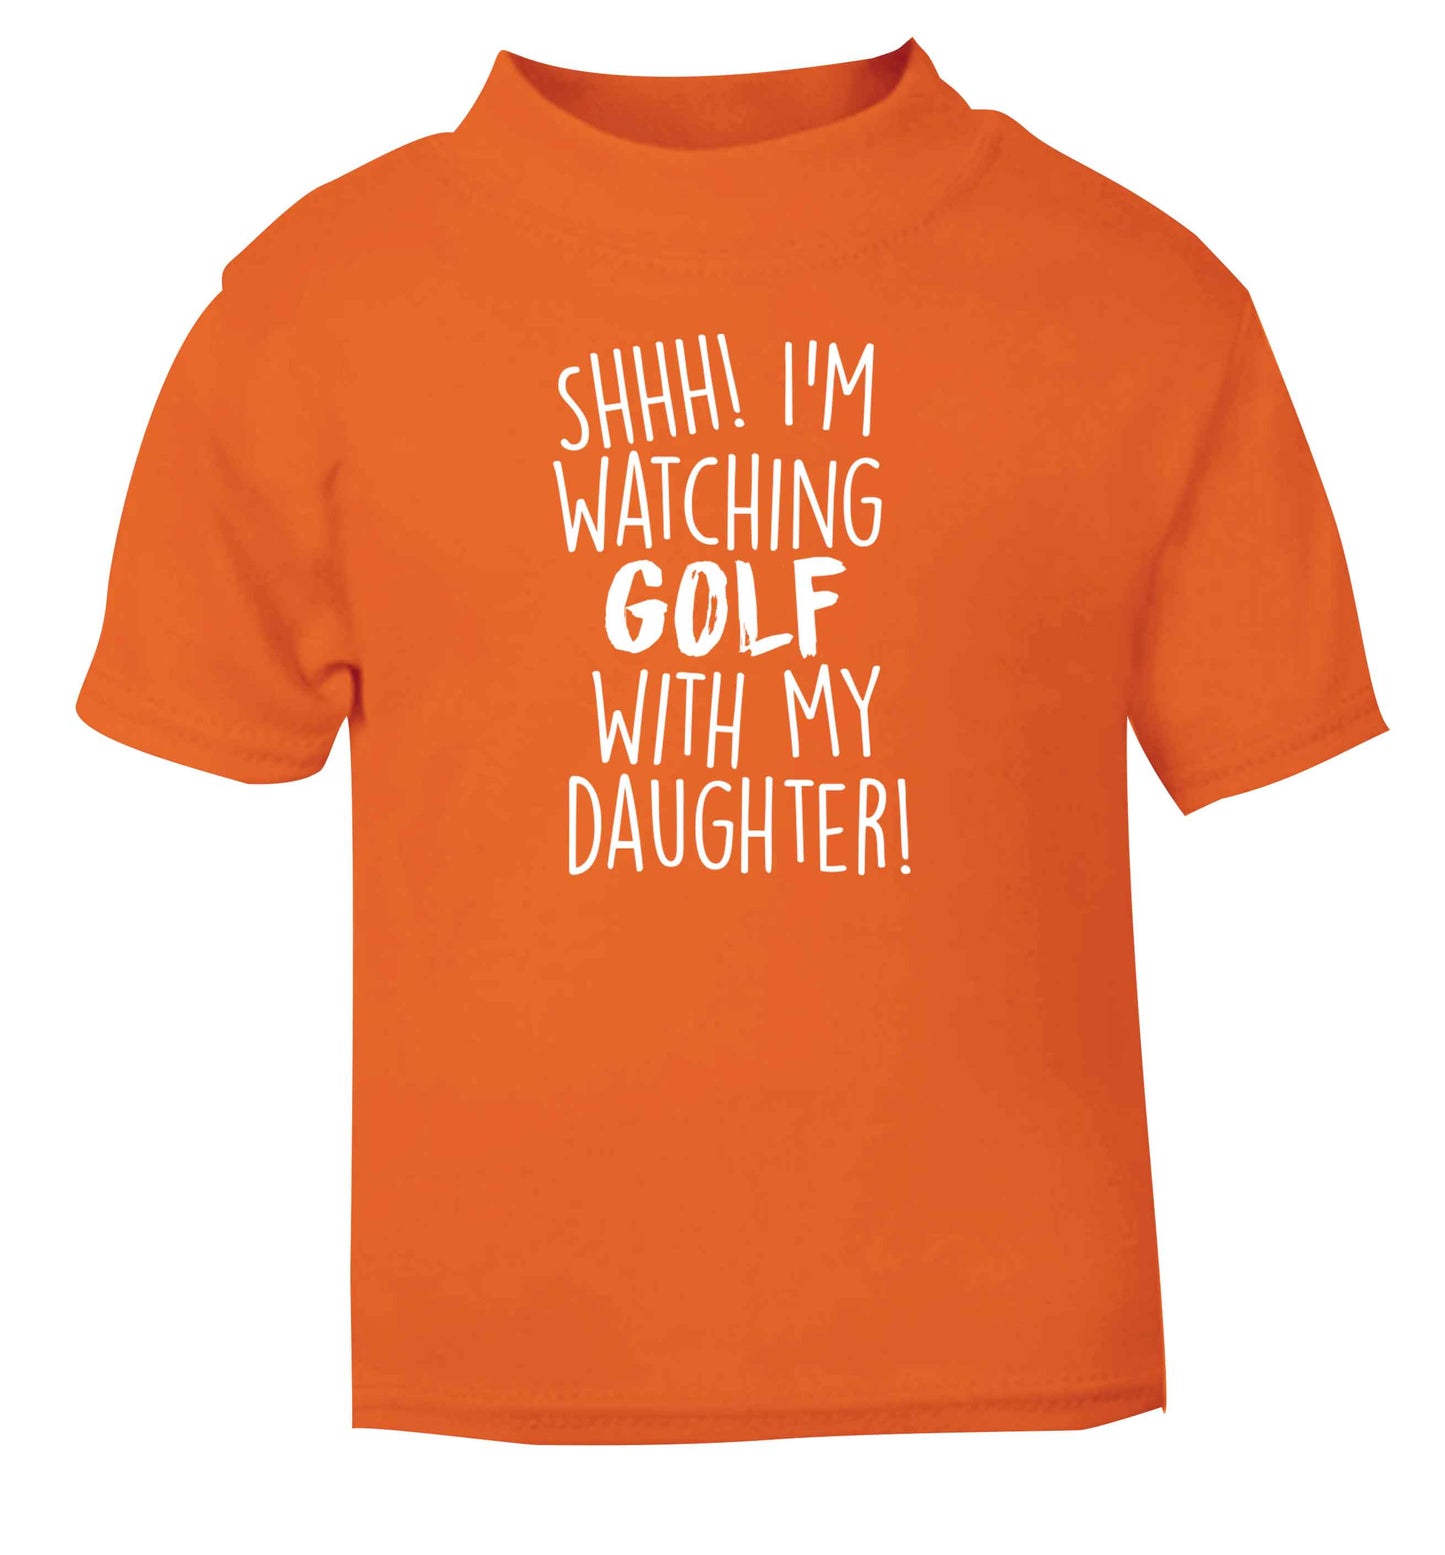 Shh I'm watching golf with my daughter orange Baby Toddler Tshirt 2 Years